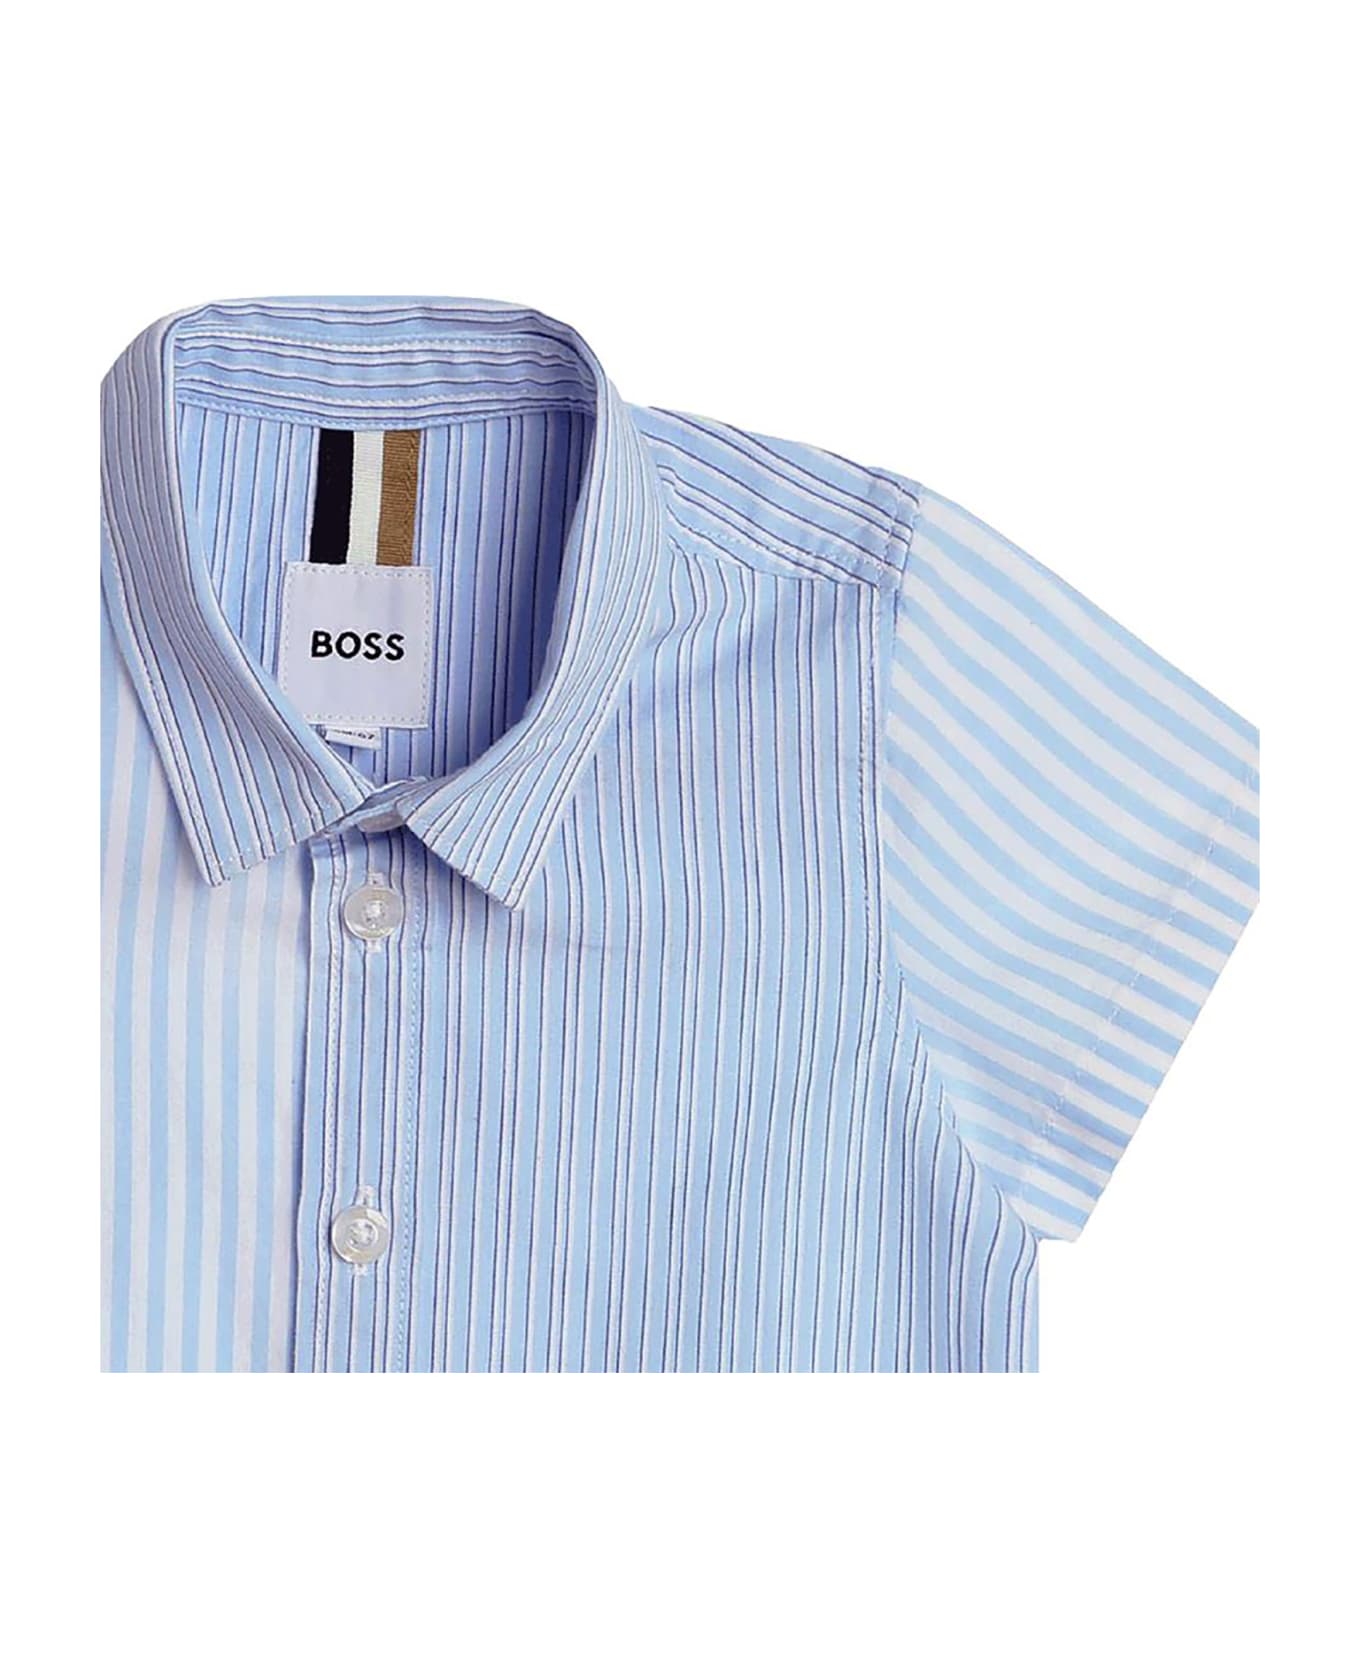 Hugo Boss Light Blue Shirt For Baby Boy With Stripes - Light Blue シャツ